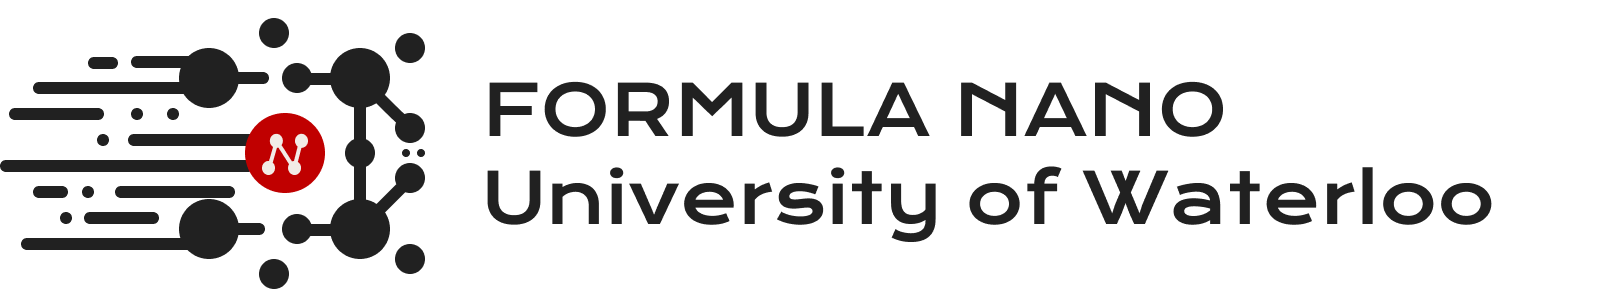 Formula nano logo